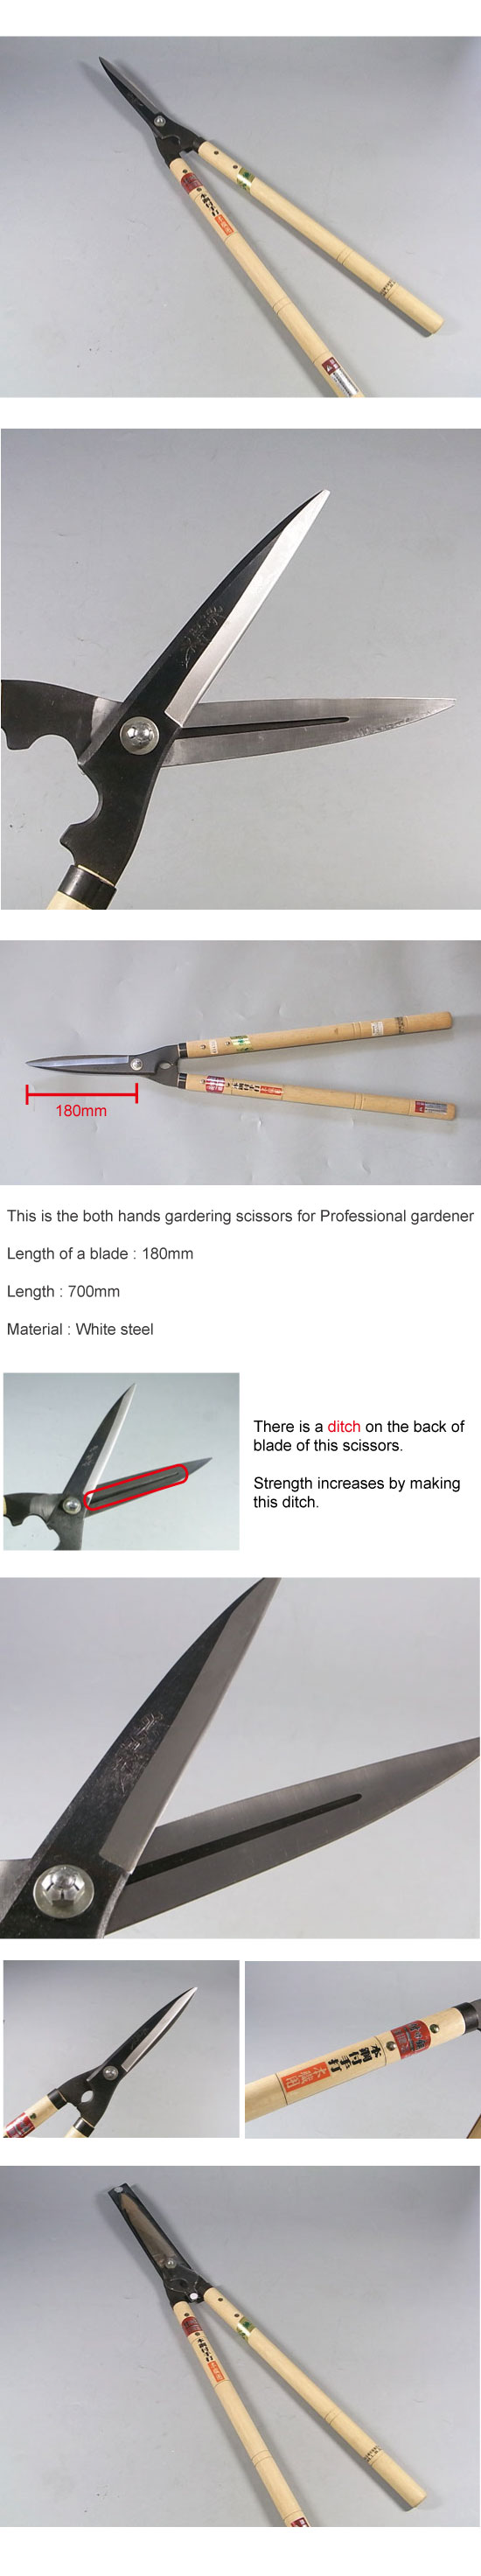 Both hands gardering scissors 180mm - White steel - [KANESHIN] "Length 700mm / Weight 1000g" No.3452